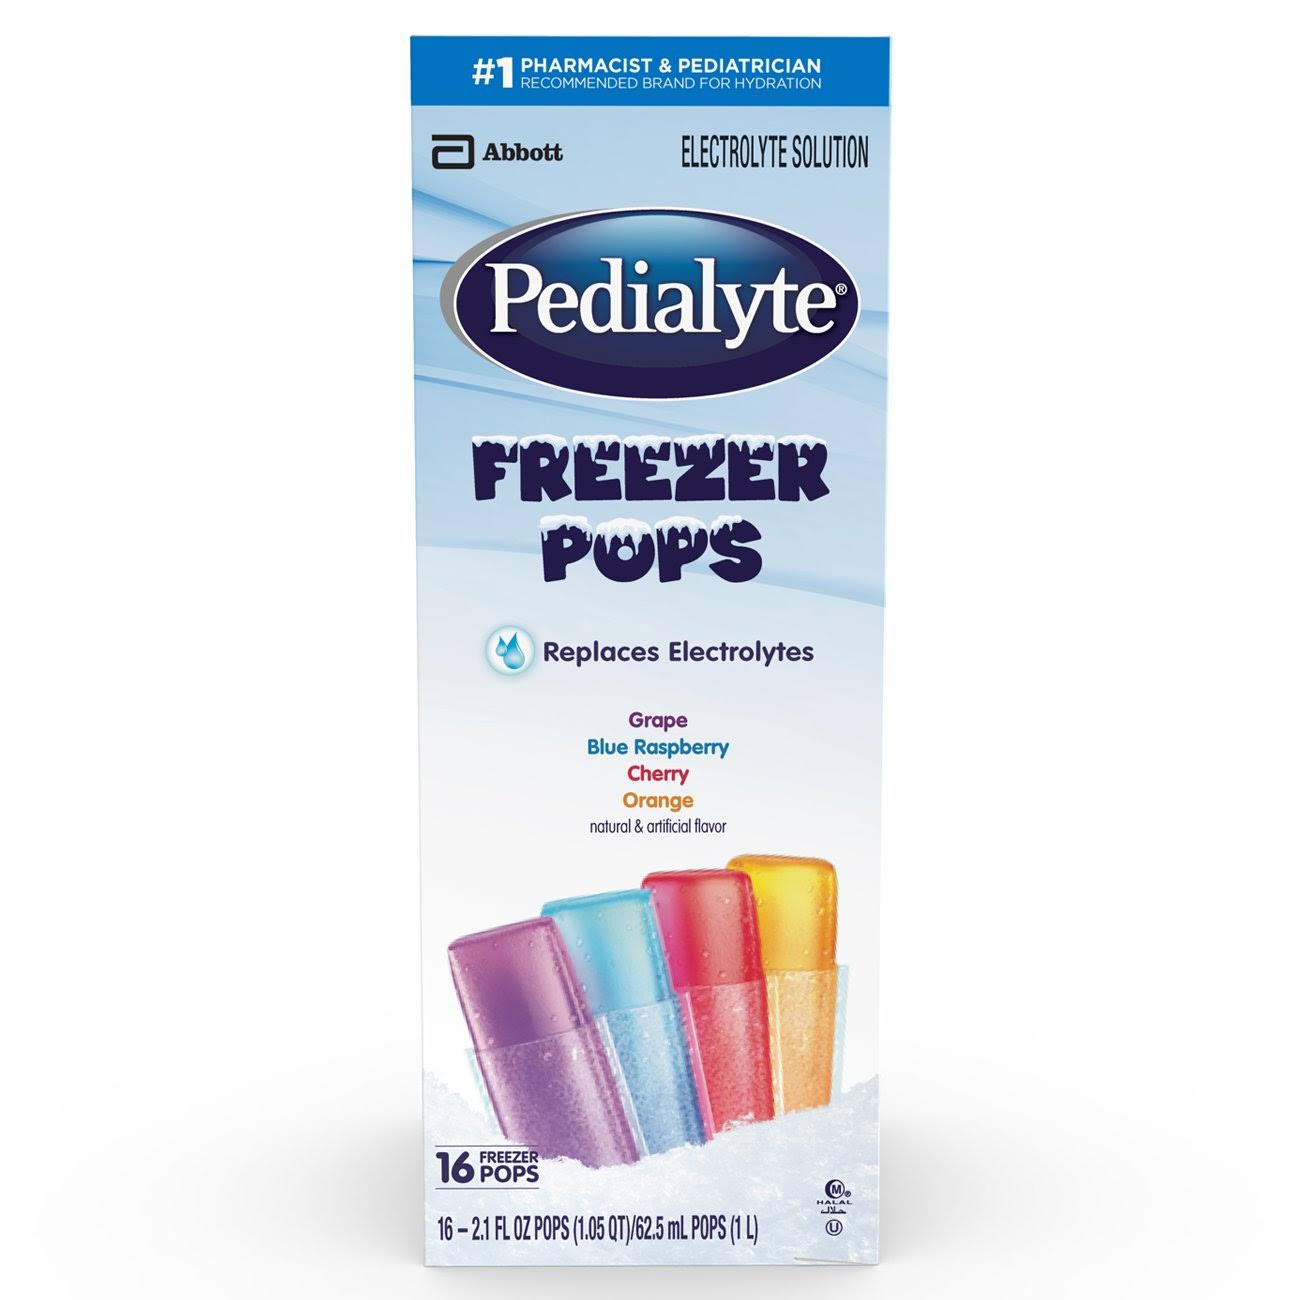 Abbott Pedialyte Freezer Pops Electrolyte Solution - 2.1 fl oz, x16